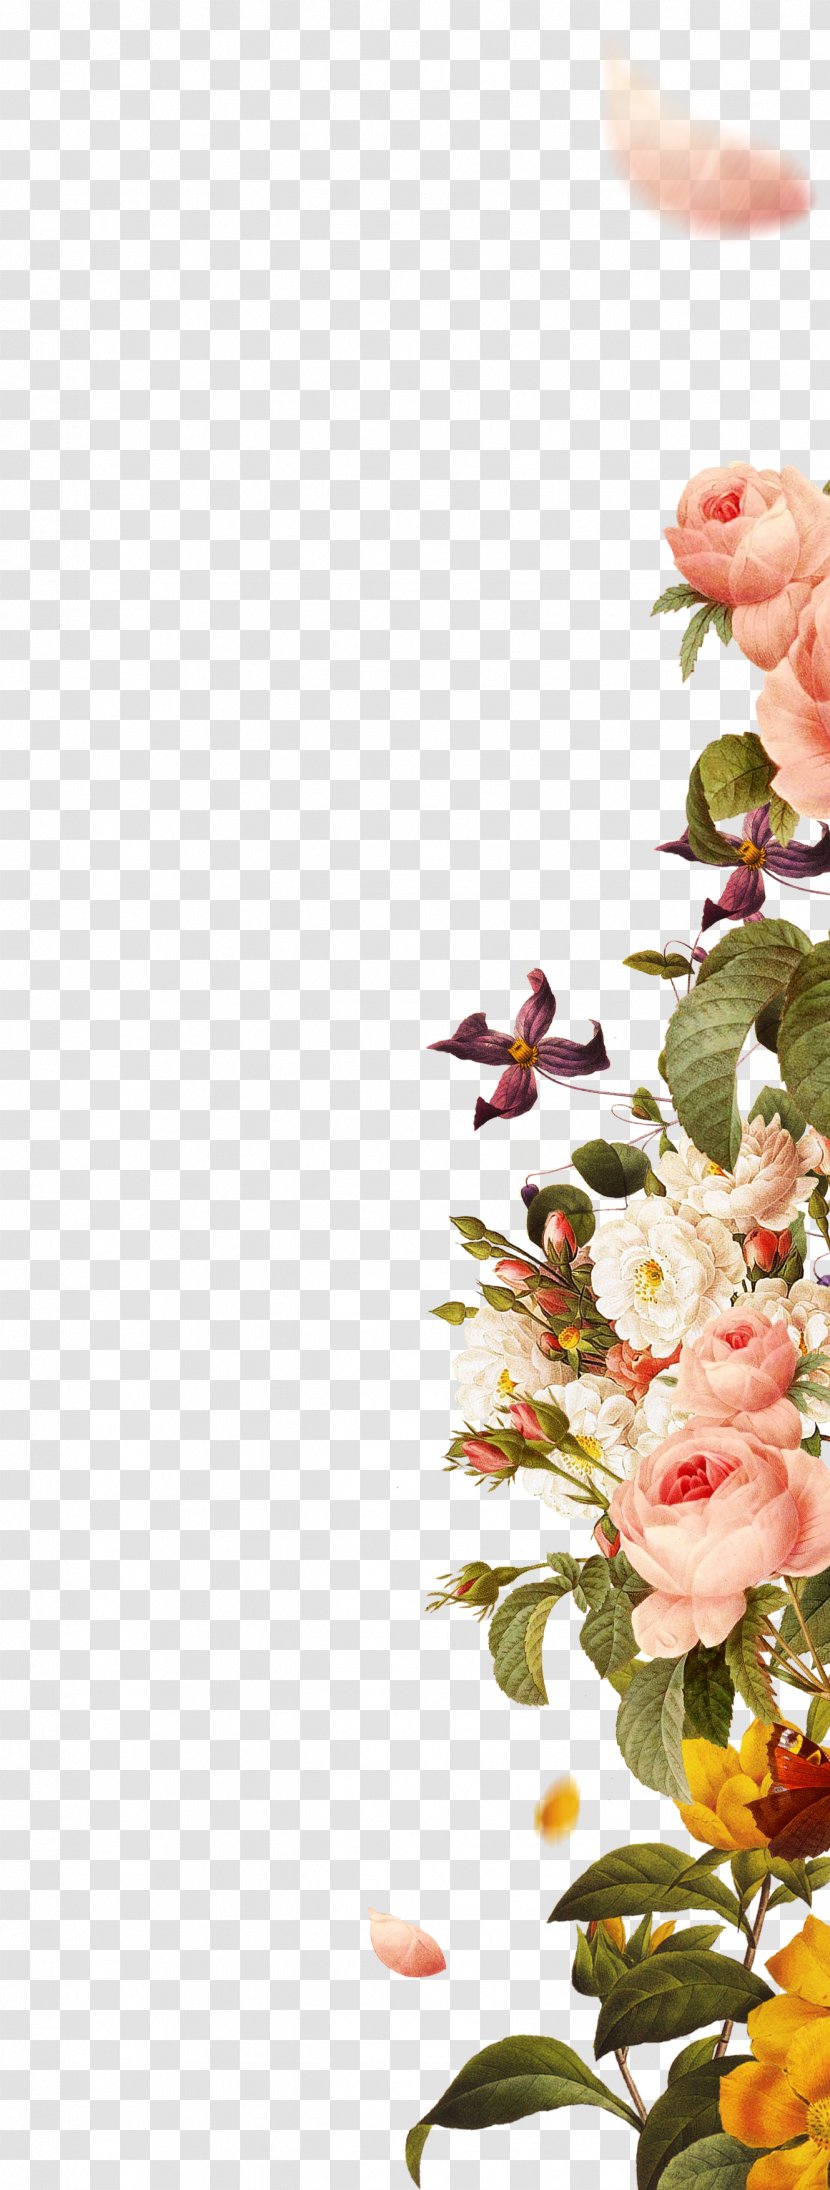 Flower Desktop Wallpaper Floral Design - Cut Flowers Transparent PNG